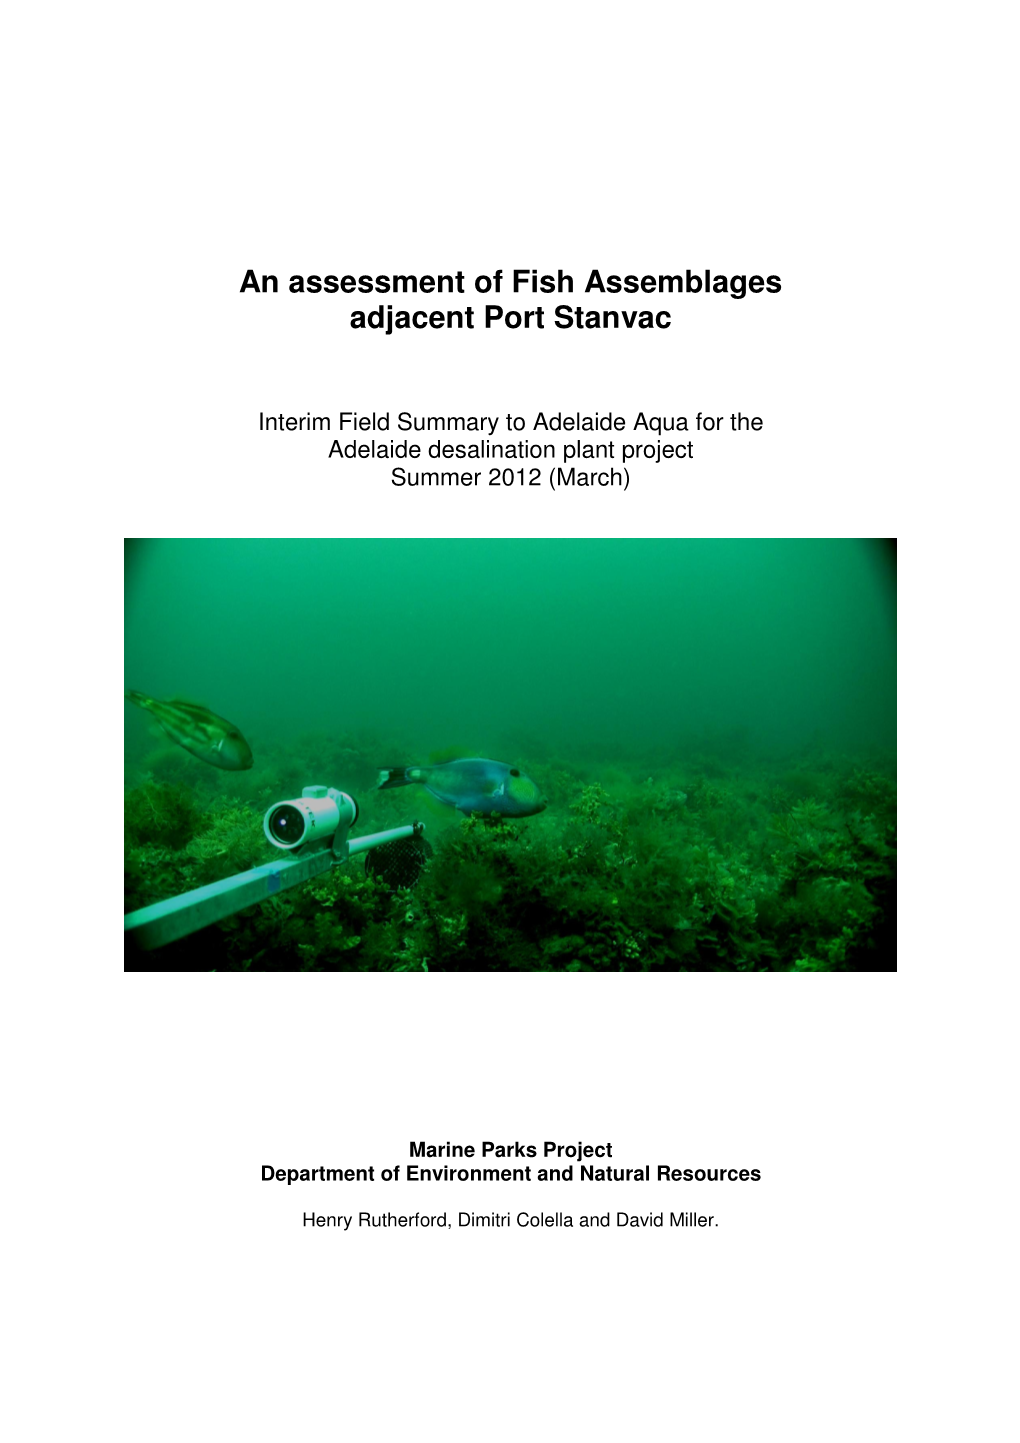 An Assessment of Fish Assemblages Adjacent Port Stanvac